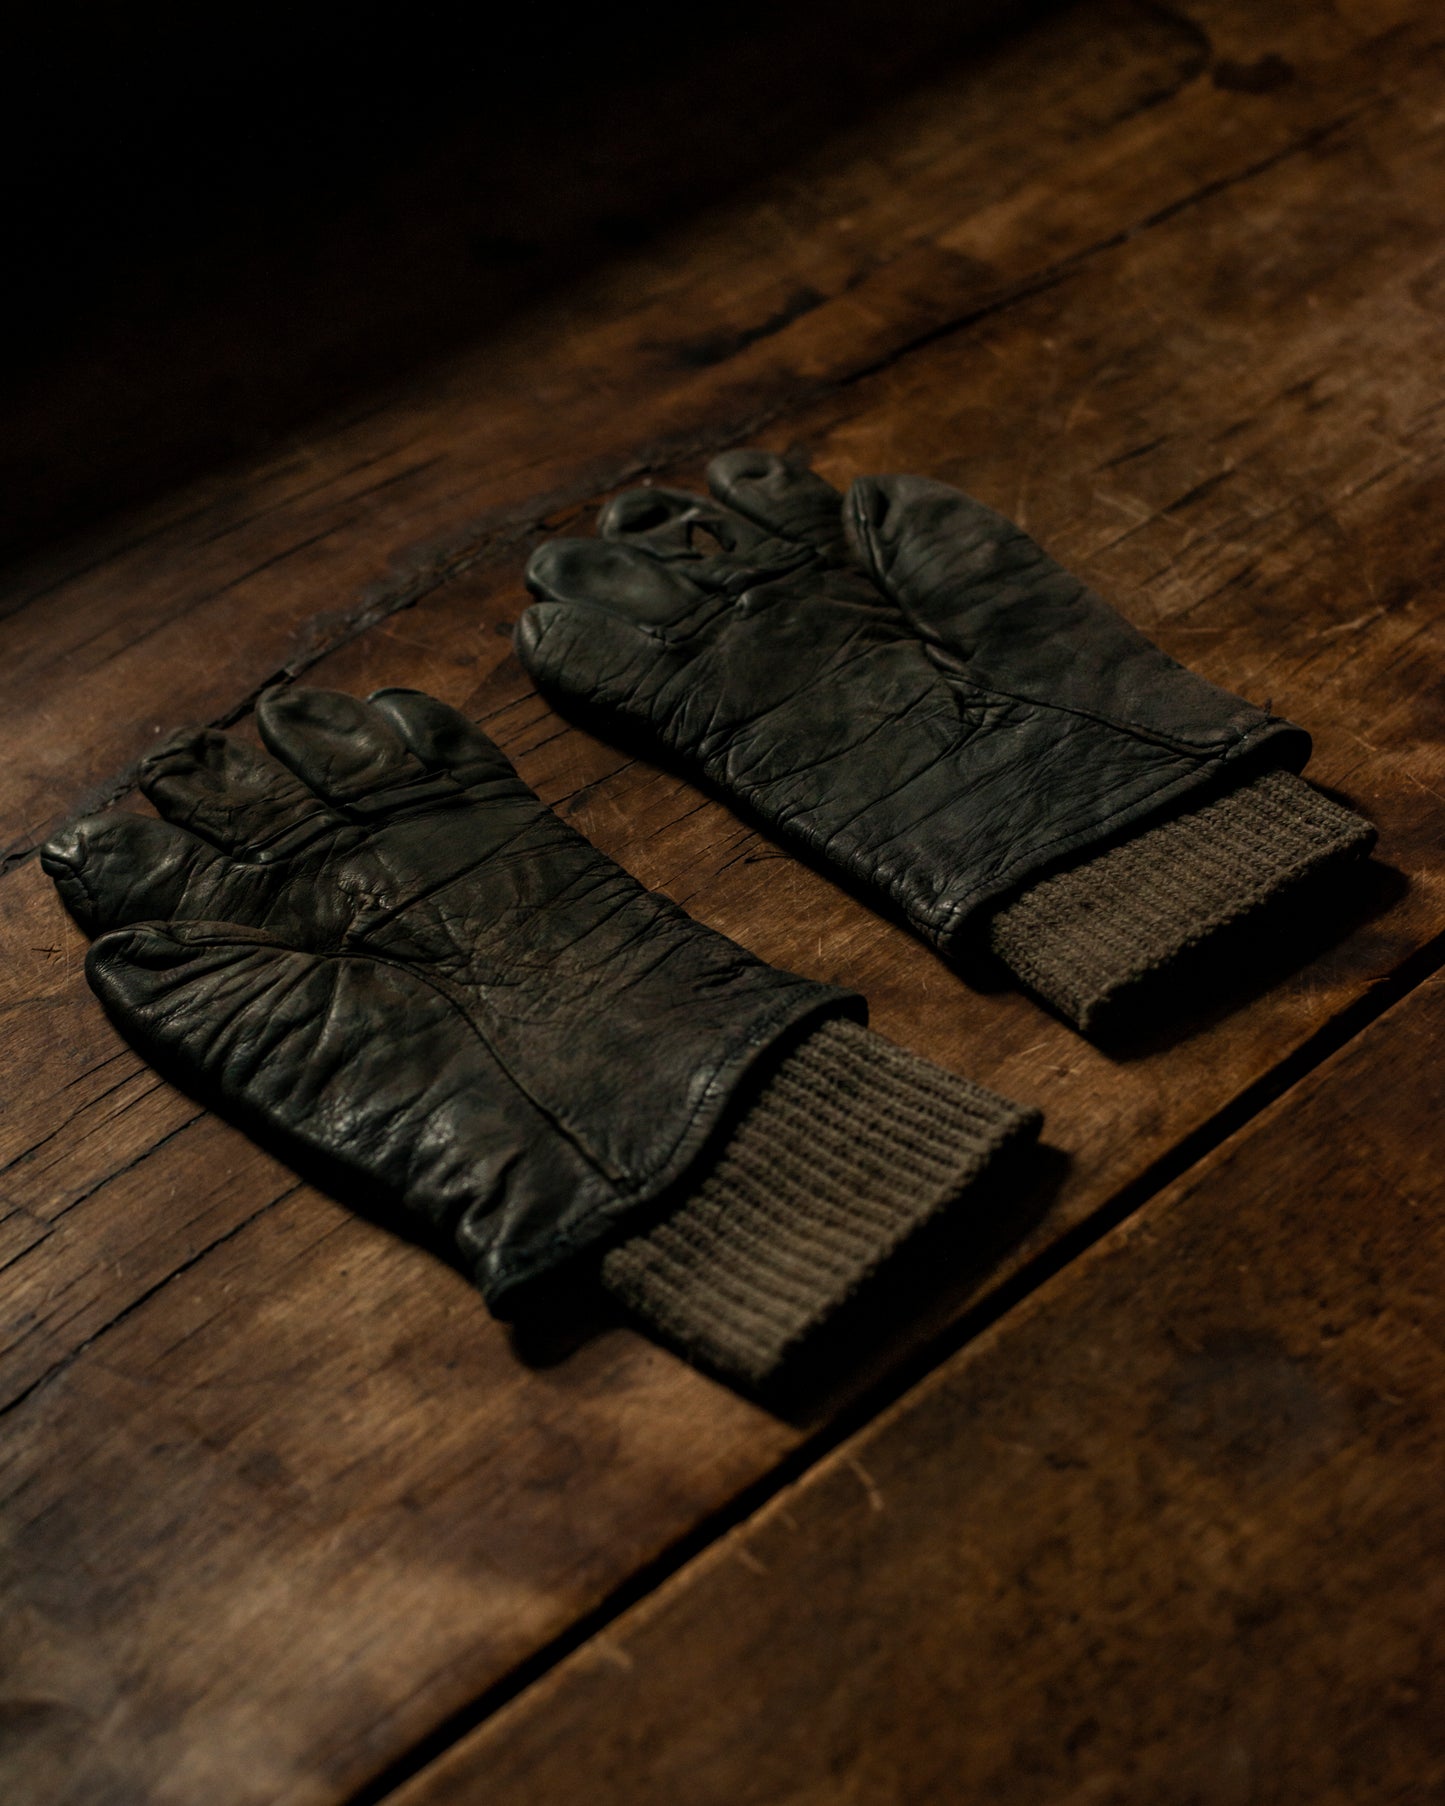 WW2 Leather Gloves